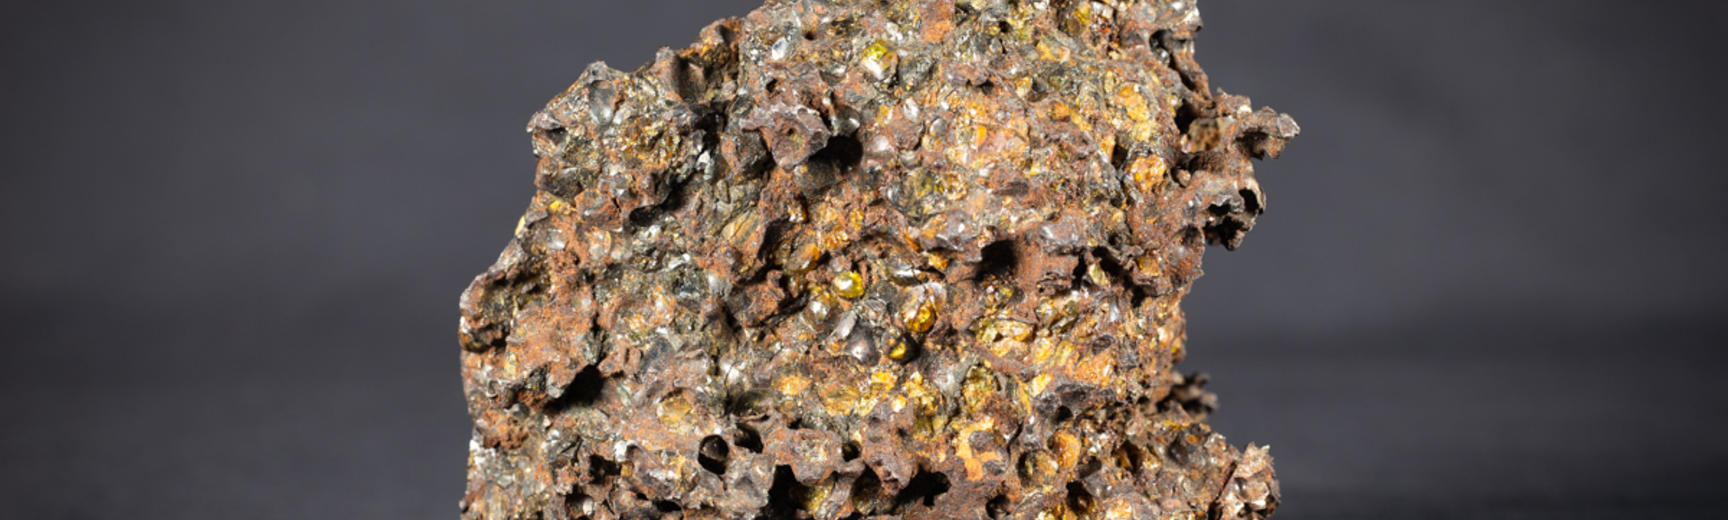 Krasnojarsk meteorite